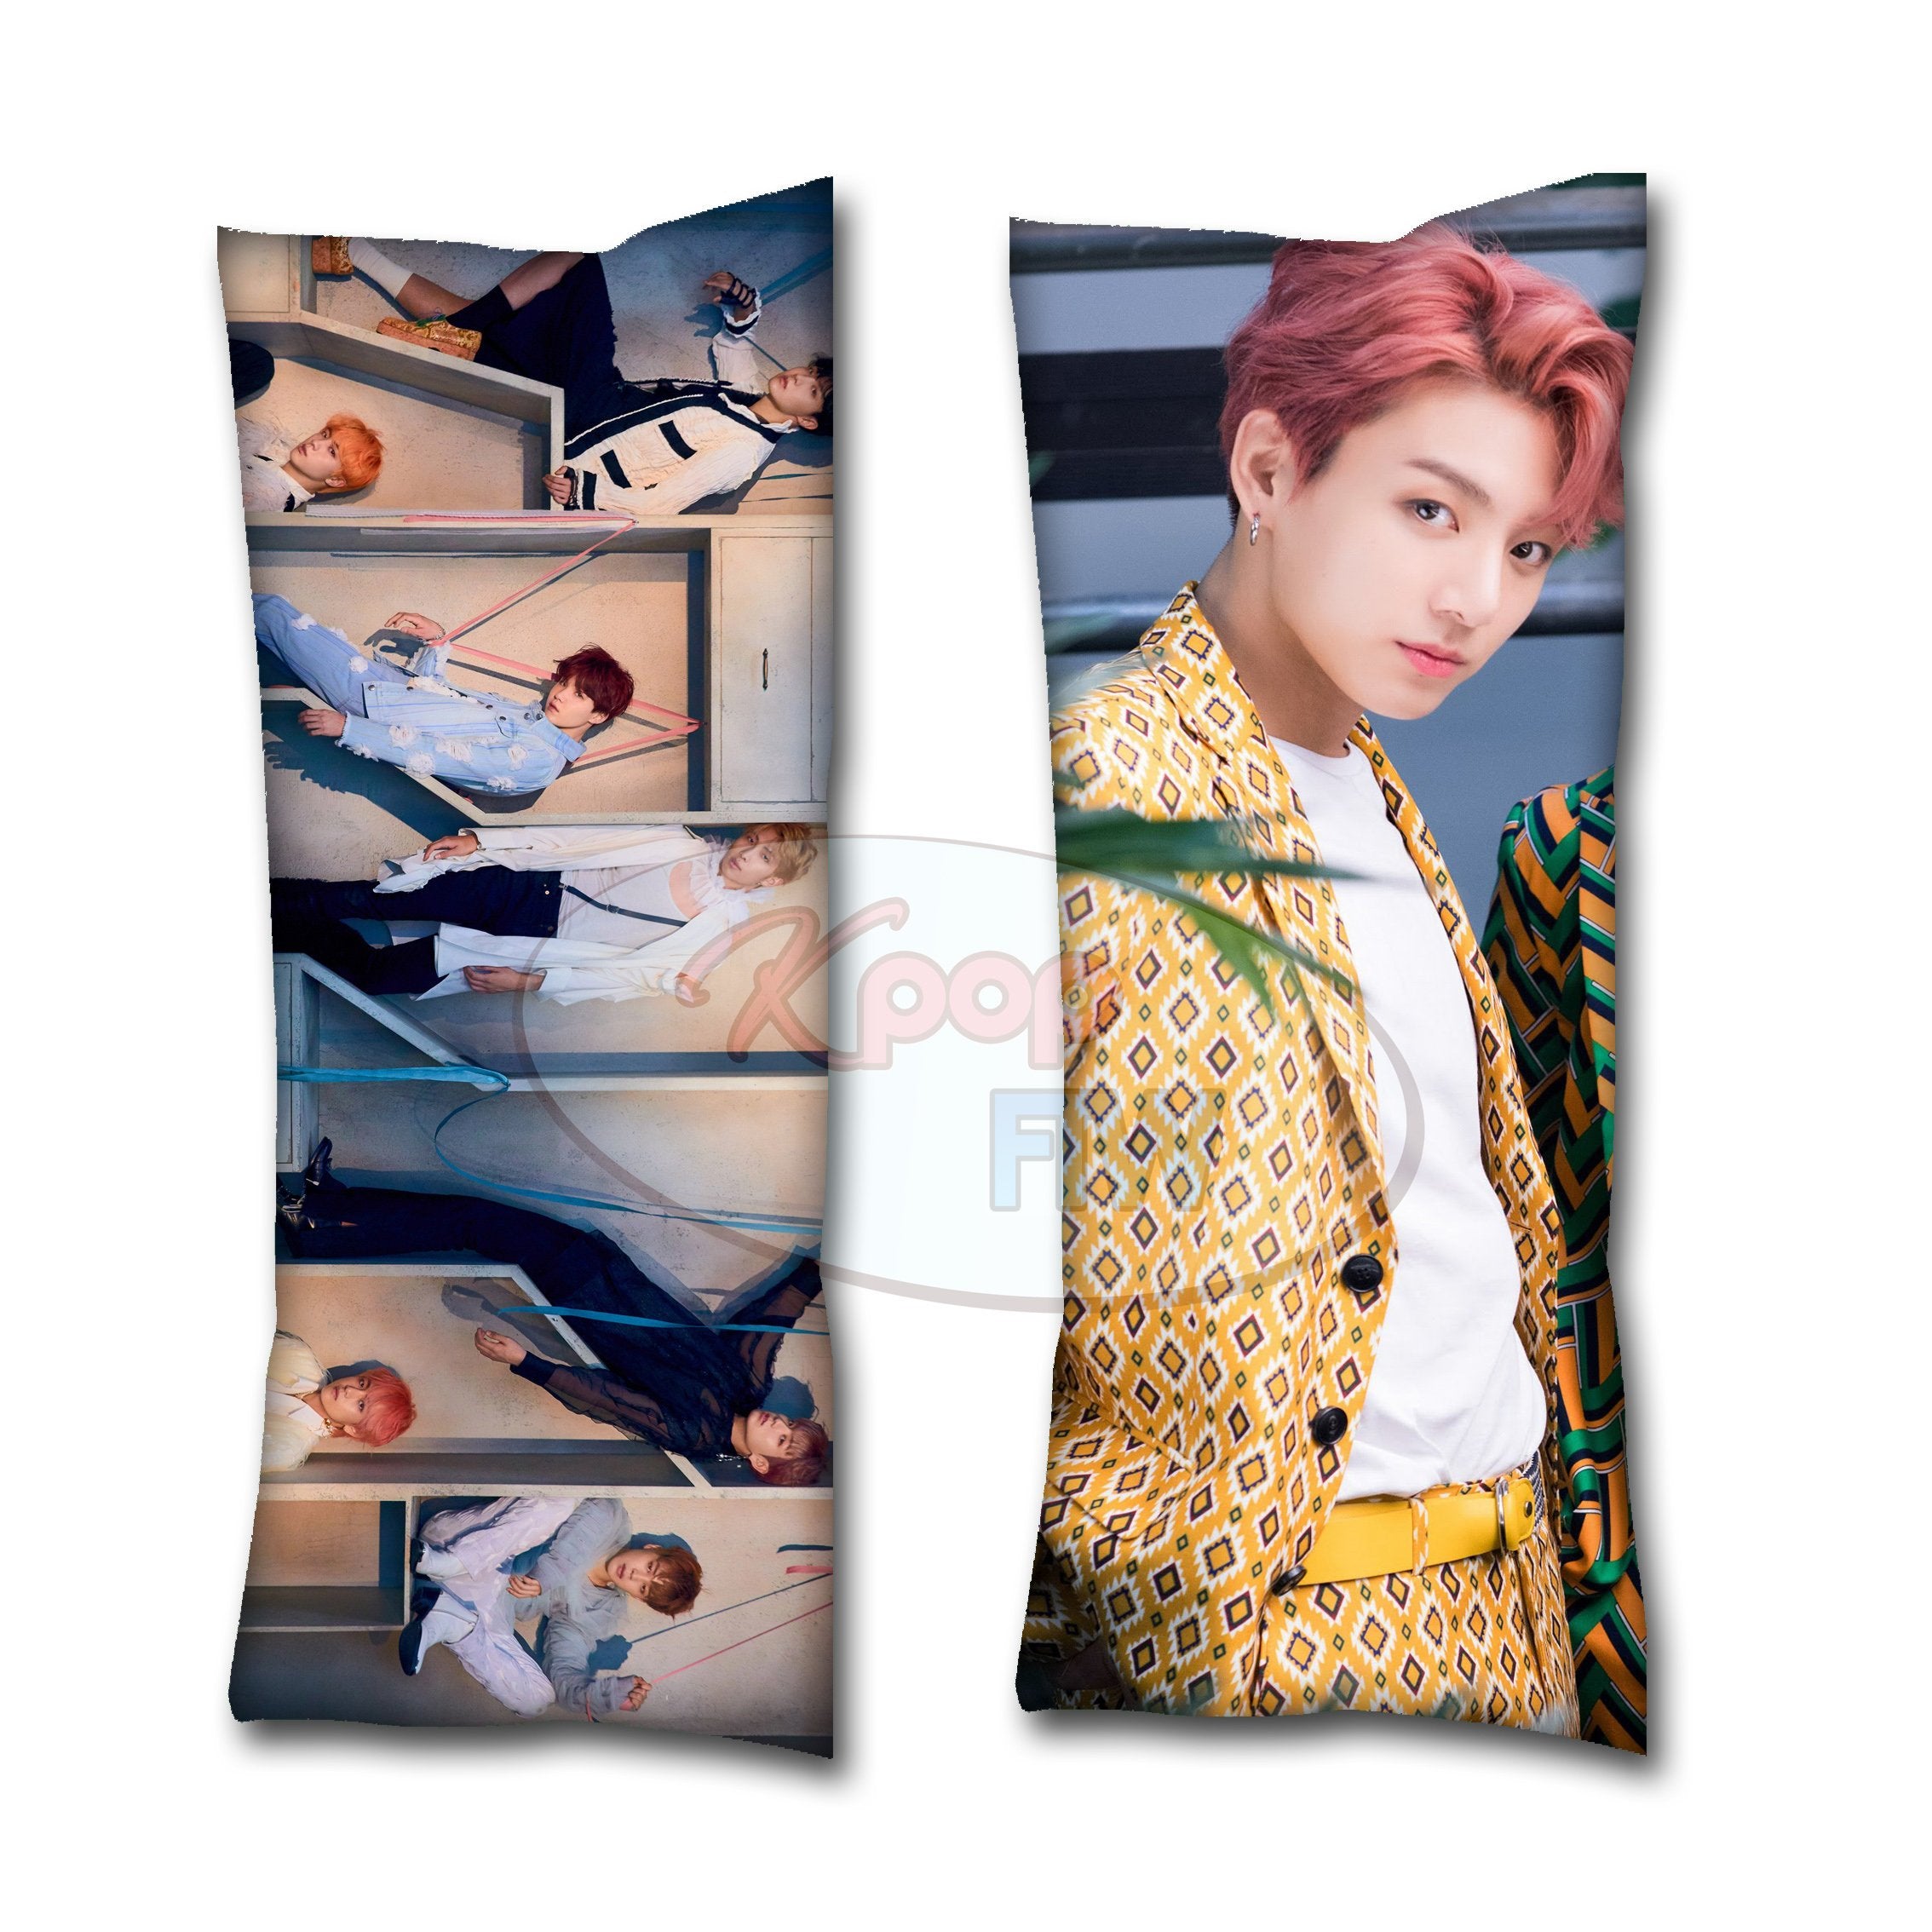 BTS Jungkook Pillowcase Cover – Kpop Exchange